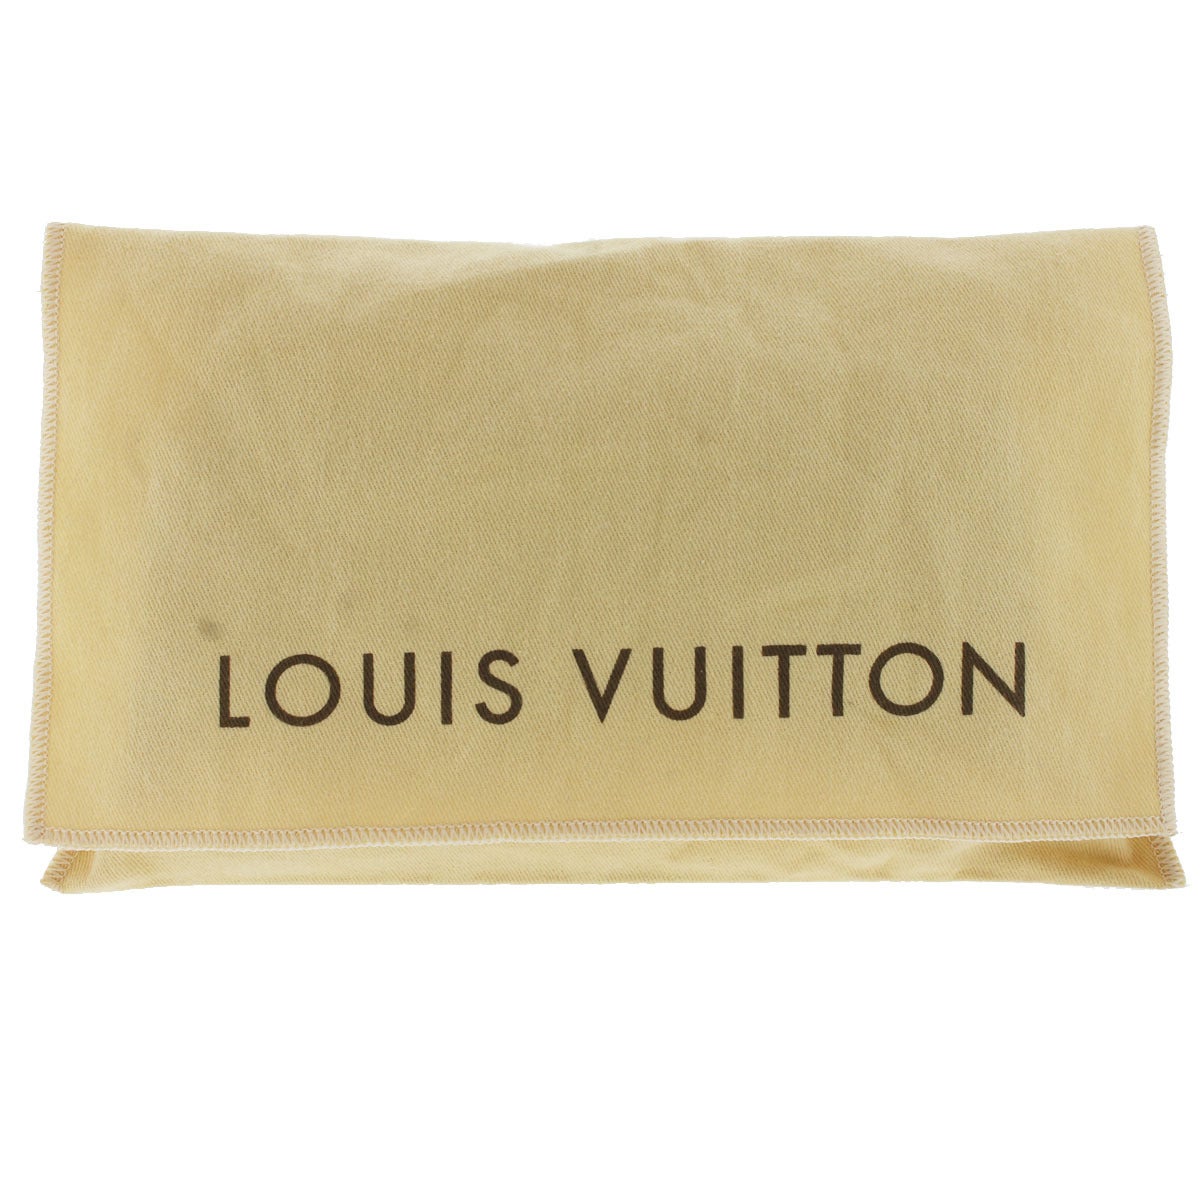 Louis Vuitton Vernis Sarah Compact Wallet Cherry 582824